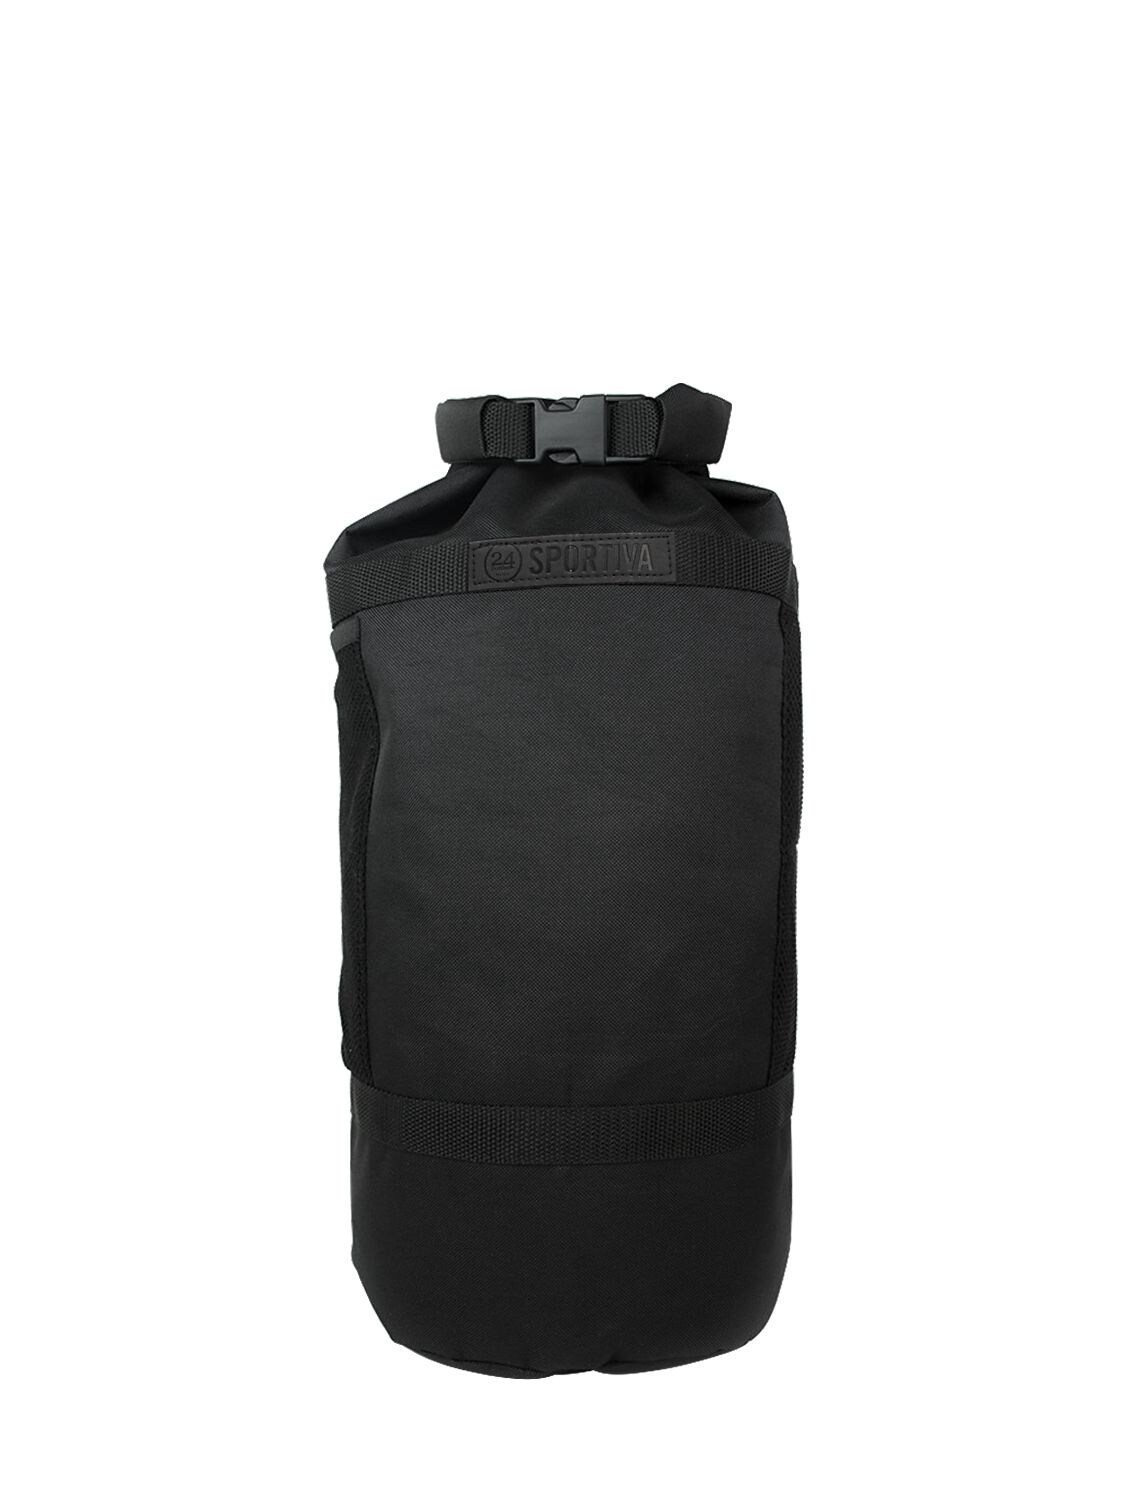 24bottles Sportiva Canvas Backpack / Duffle Bag In Black